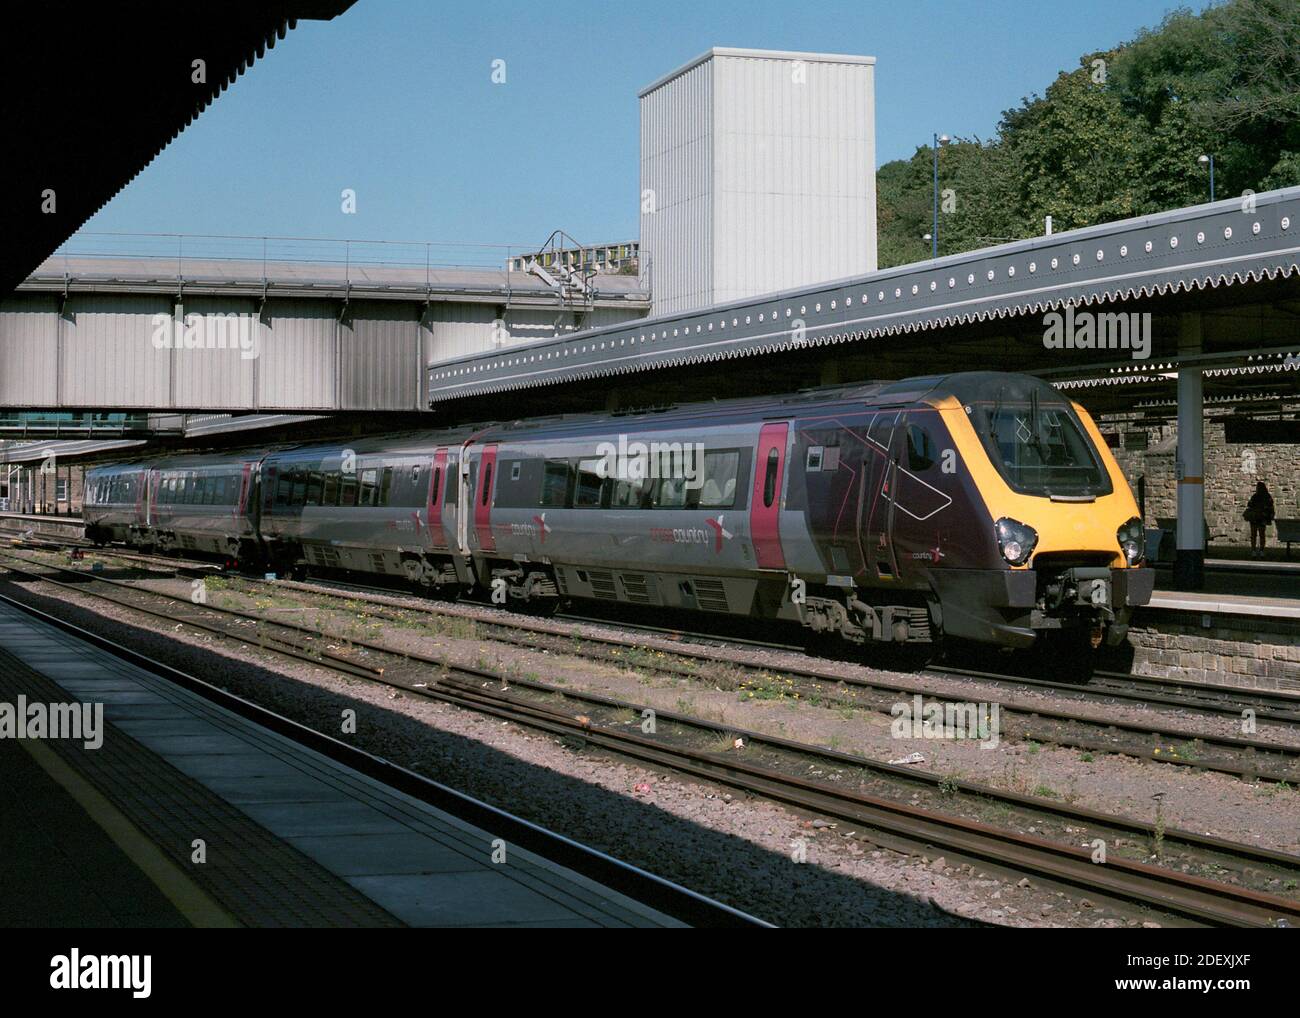 Sheffield, UK - 21 September 2019: A CrossCountry train at Sheffield Station. Stock Photo